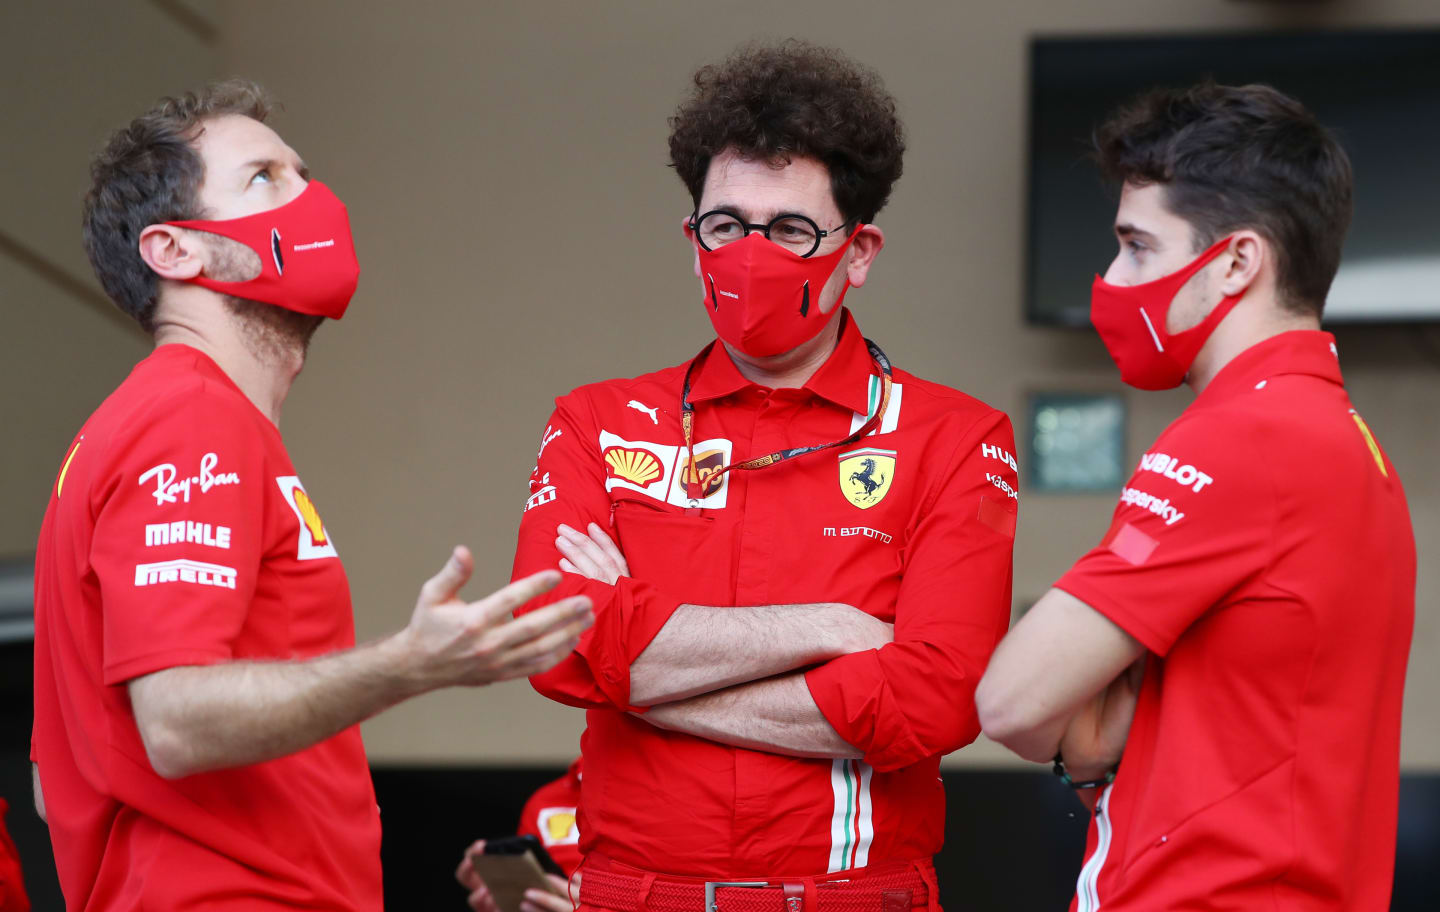 BAHRAIN, BAHRAIN - DECEMBER 03: Scuderia Ferrari Team Principal Mattia Binotto speaks with